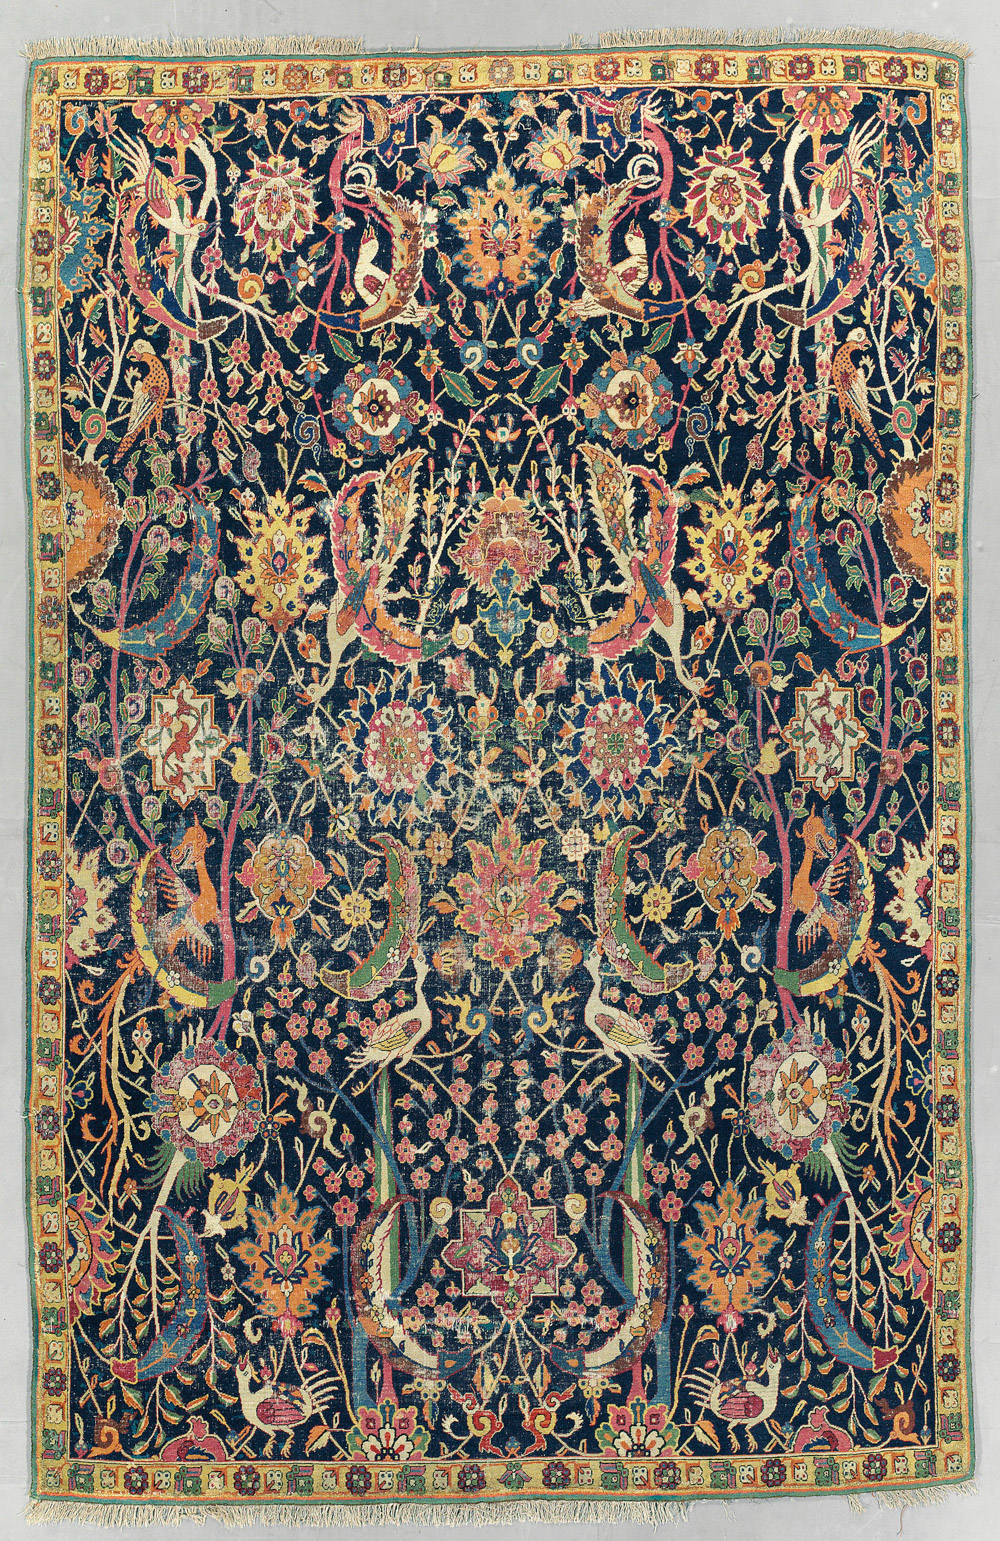 Kerman ‘vase’ carpet fragment, southeast Persia, early 17th century. 1.96 x 3.06m (6’5” x 10’1”). £400,000-600,000